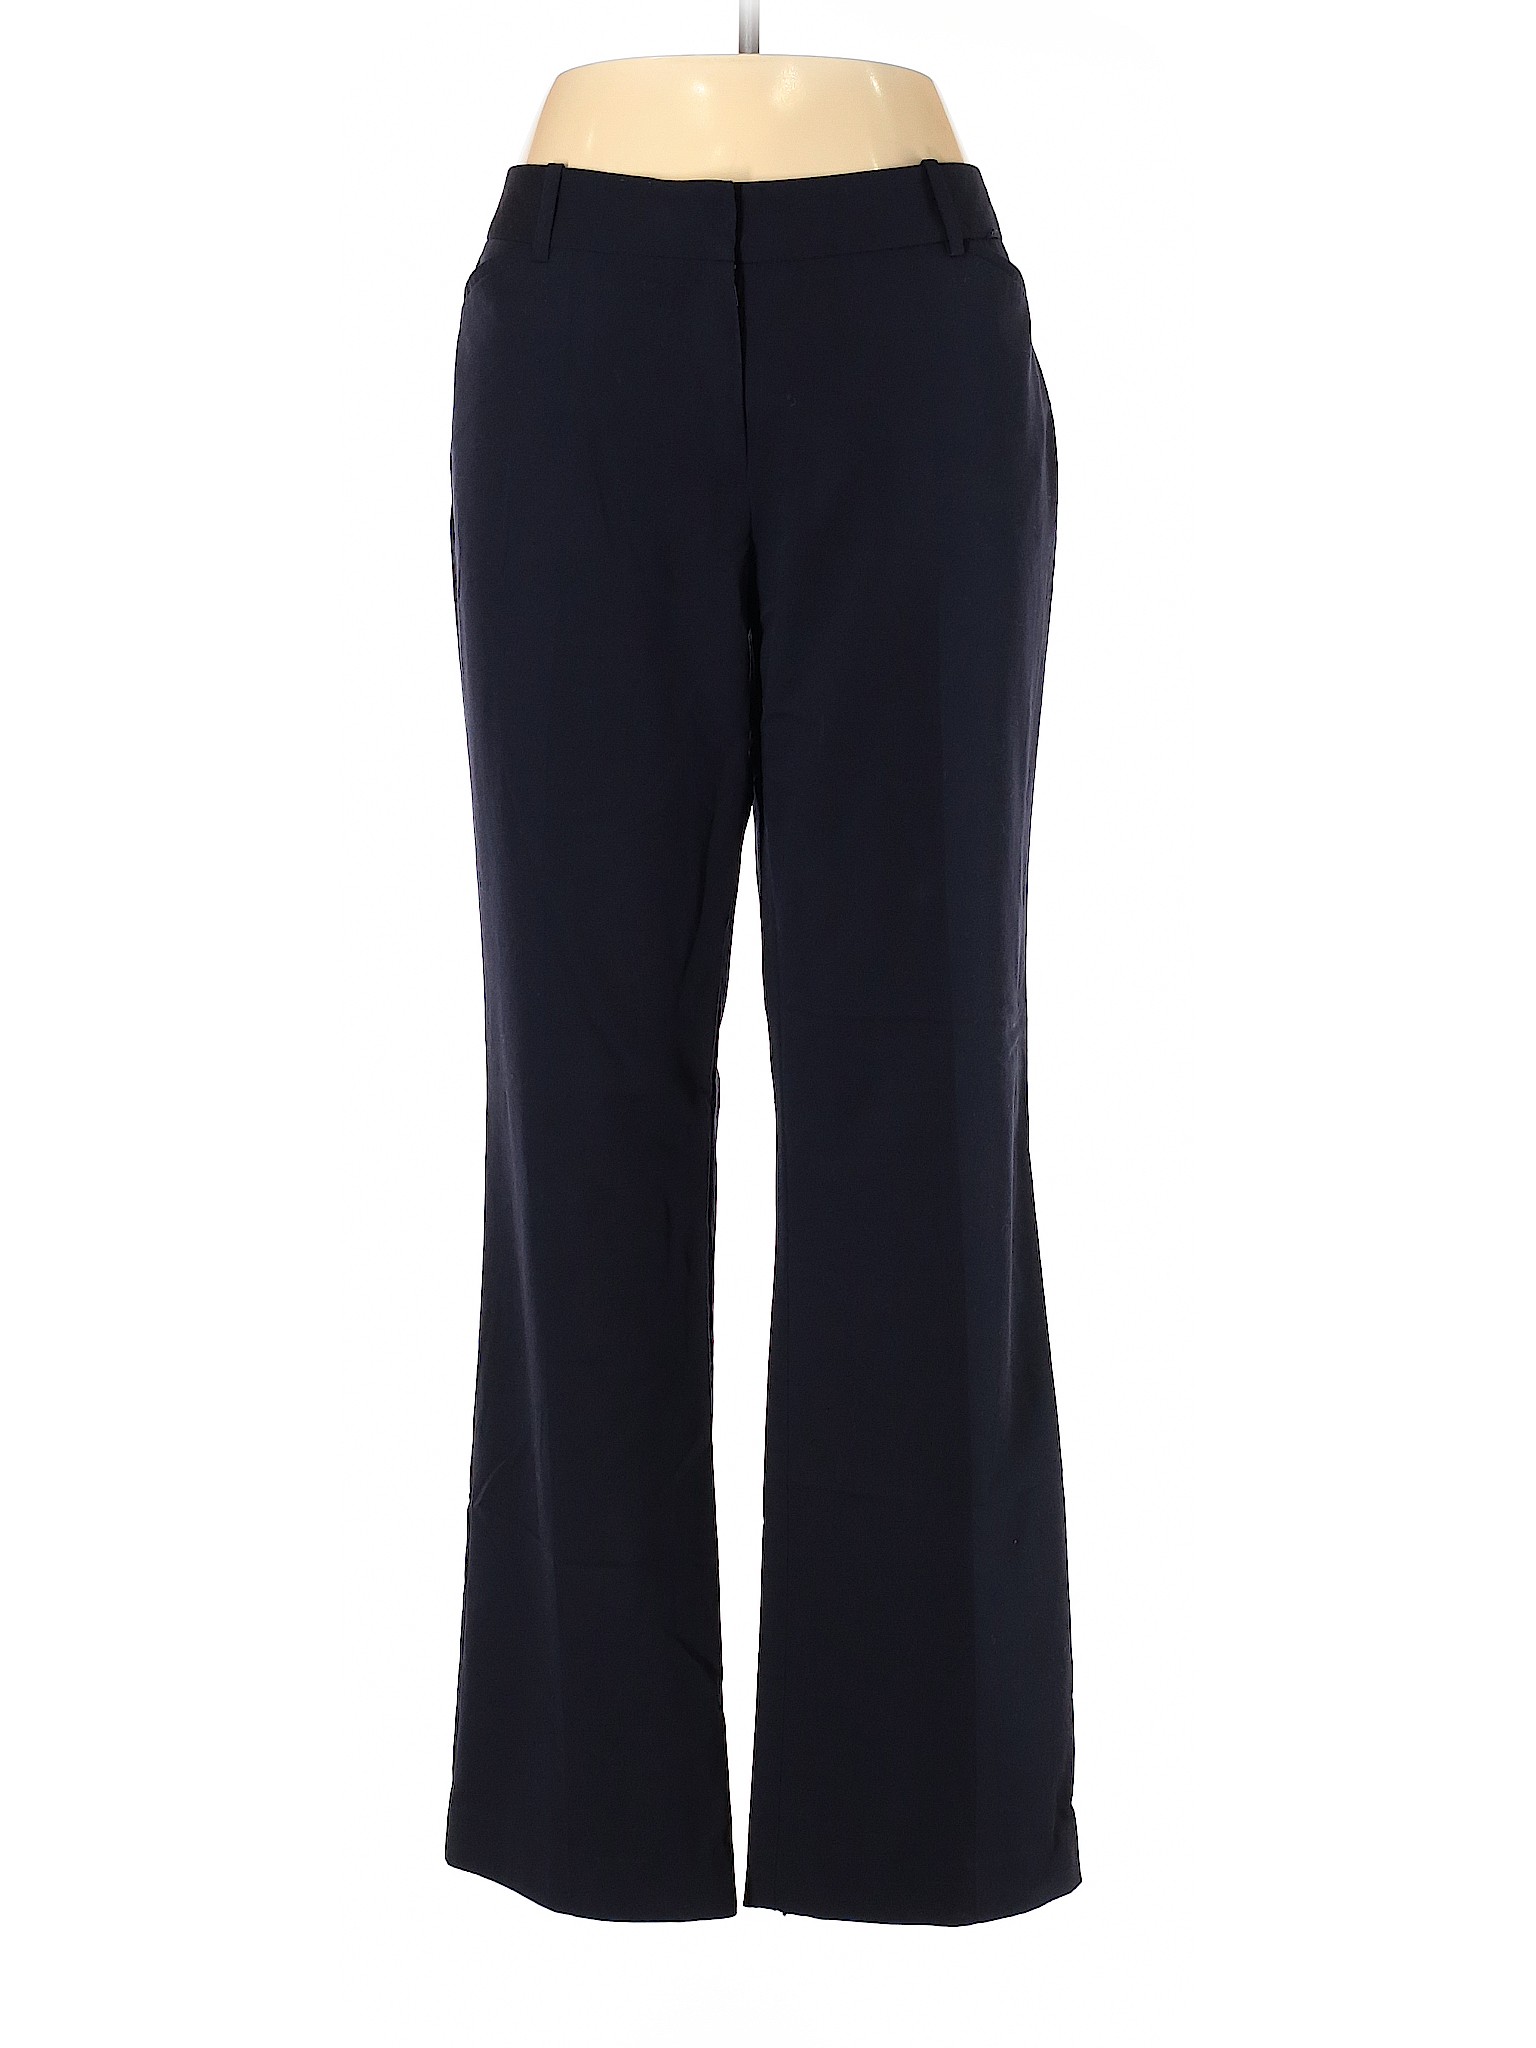 Worthington Women Black Dress Pants 12 | eBay